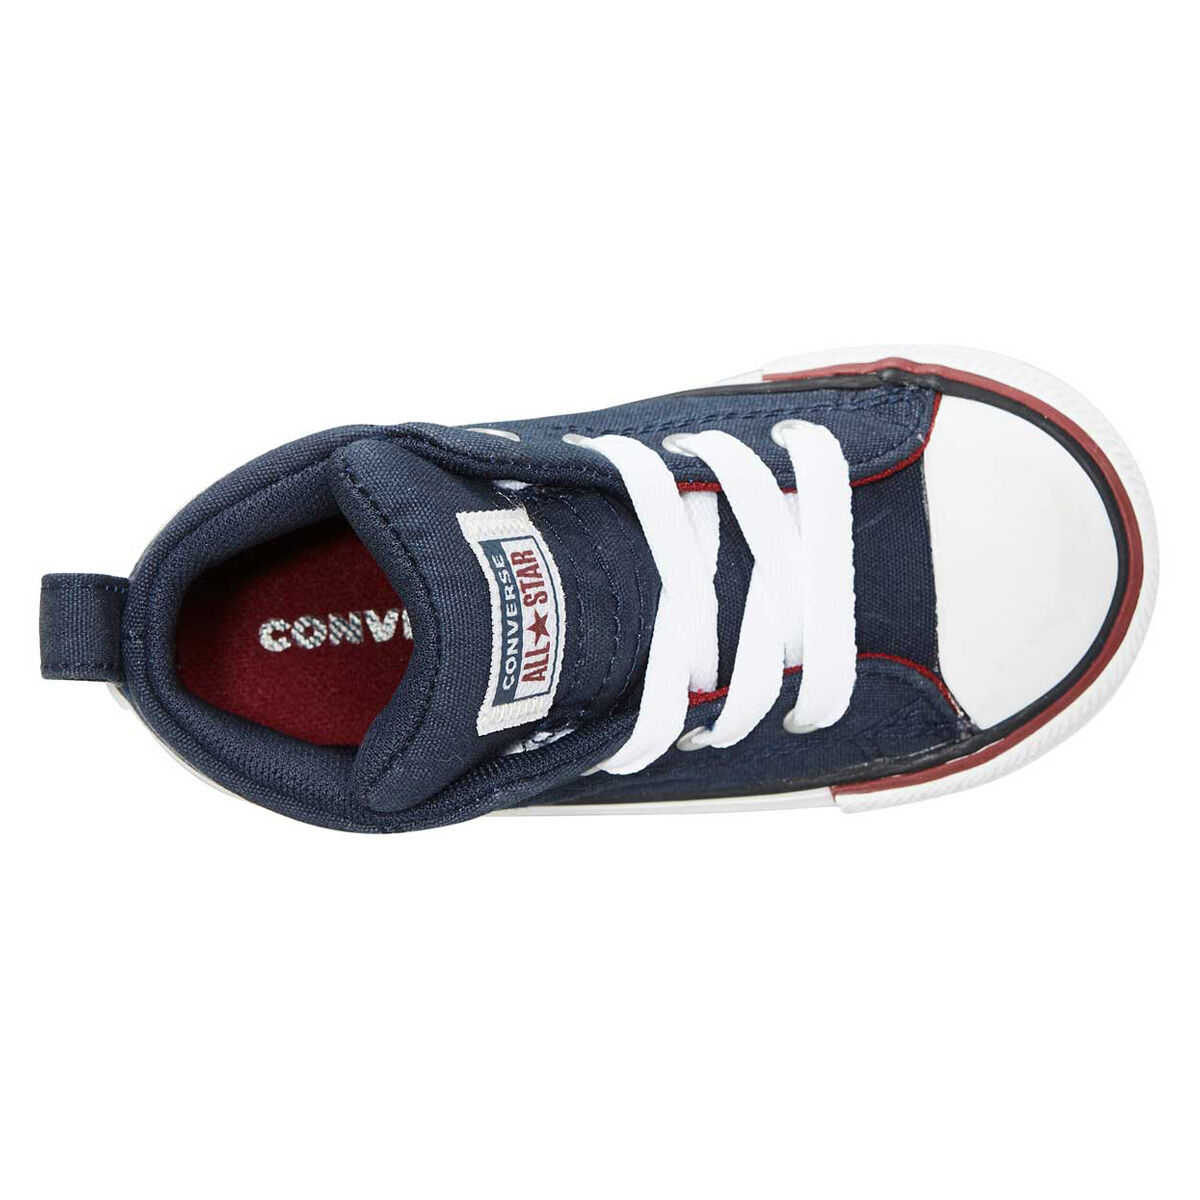 converse shoes rebel